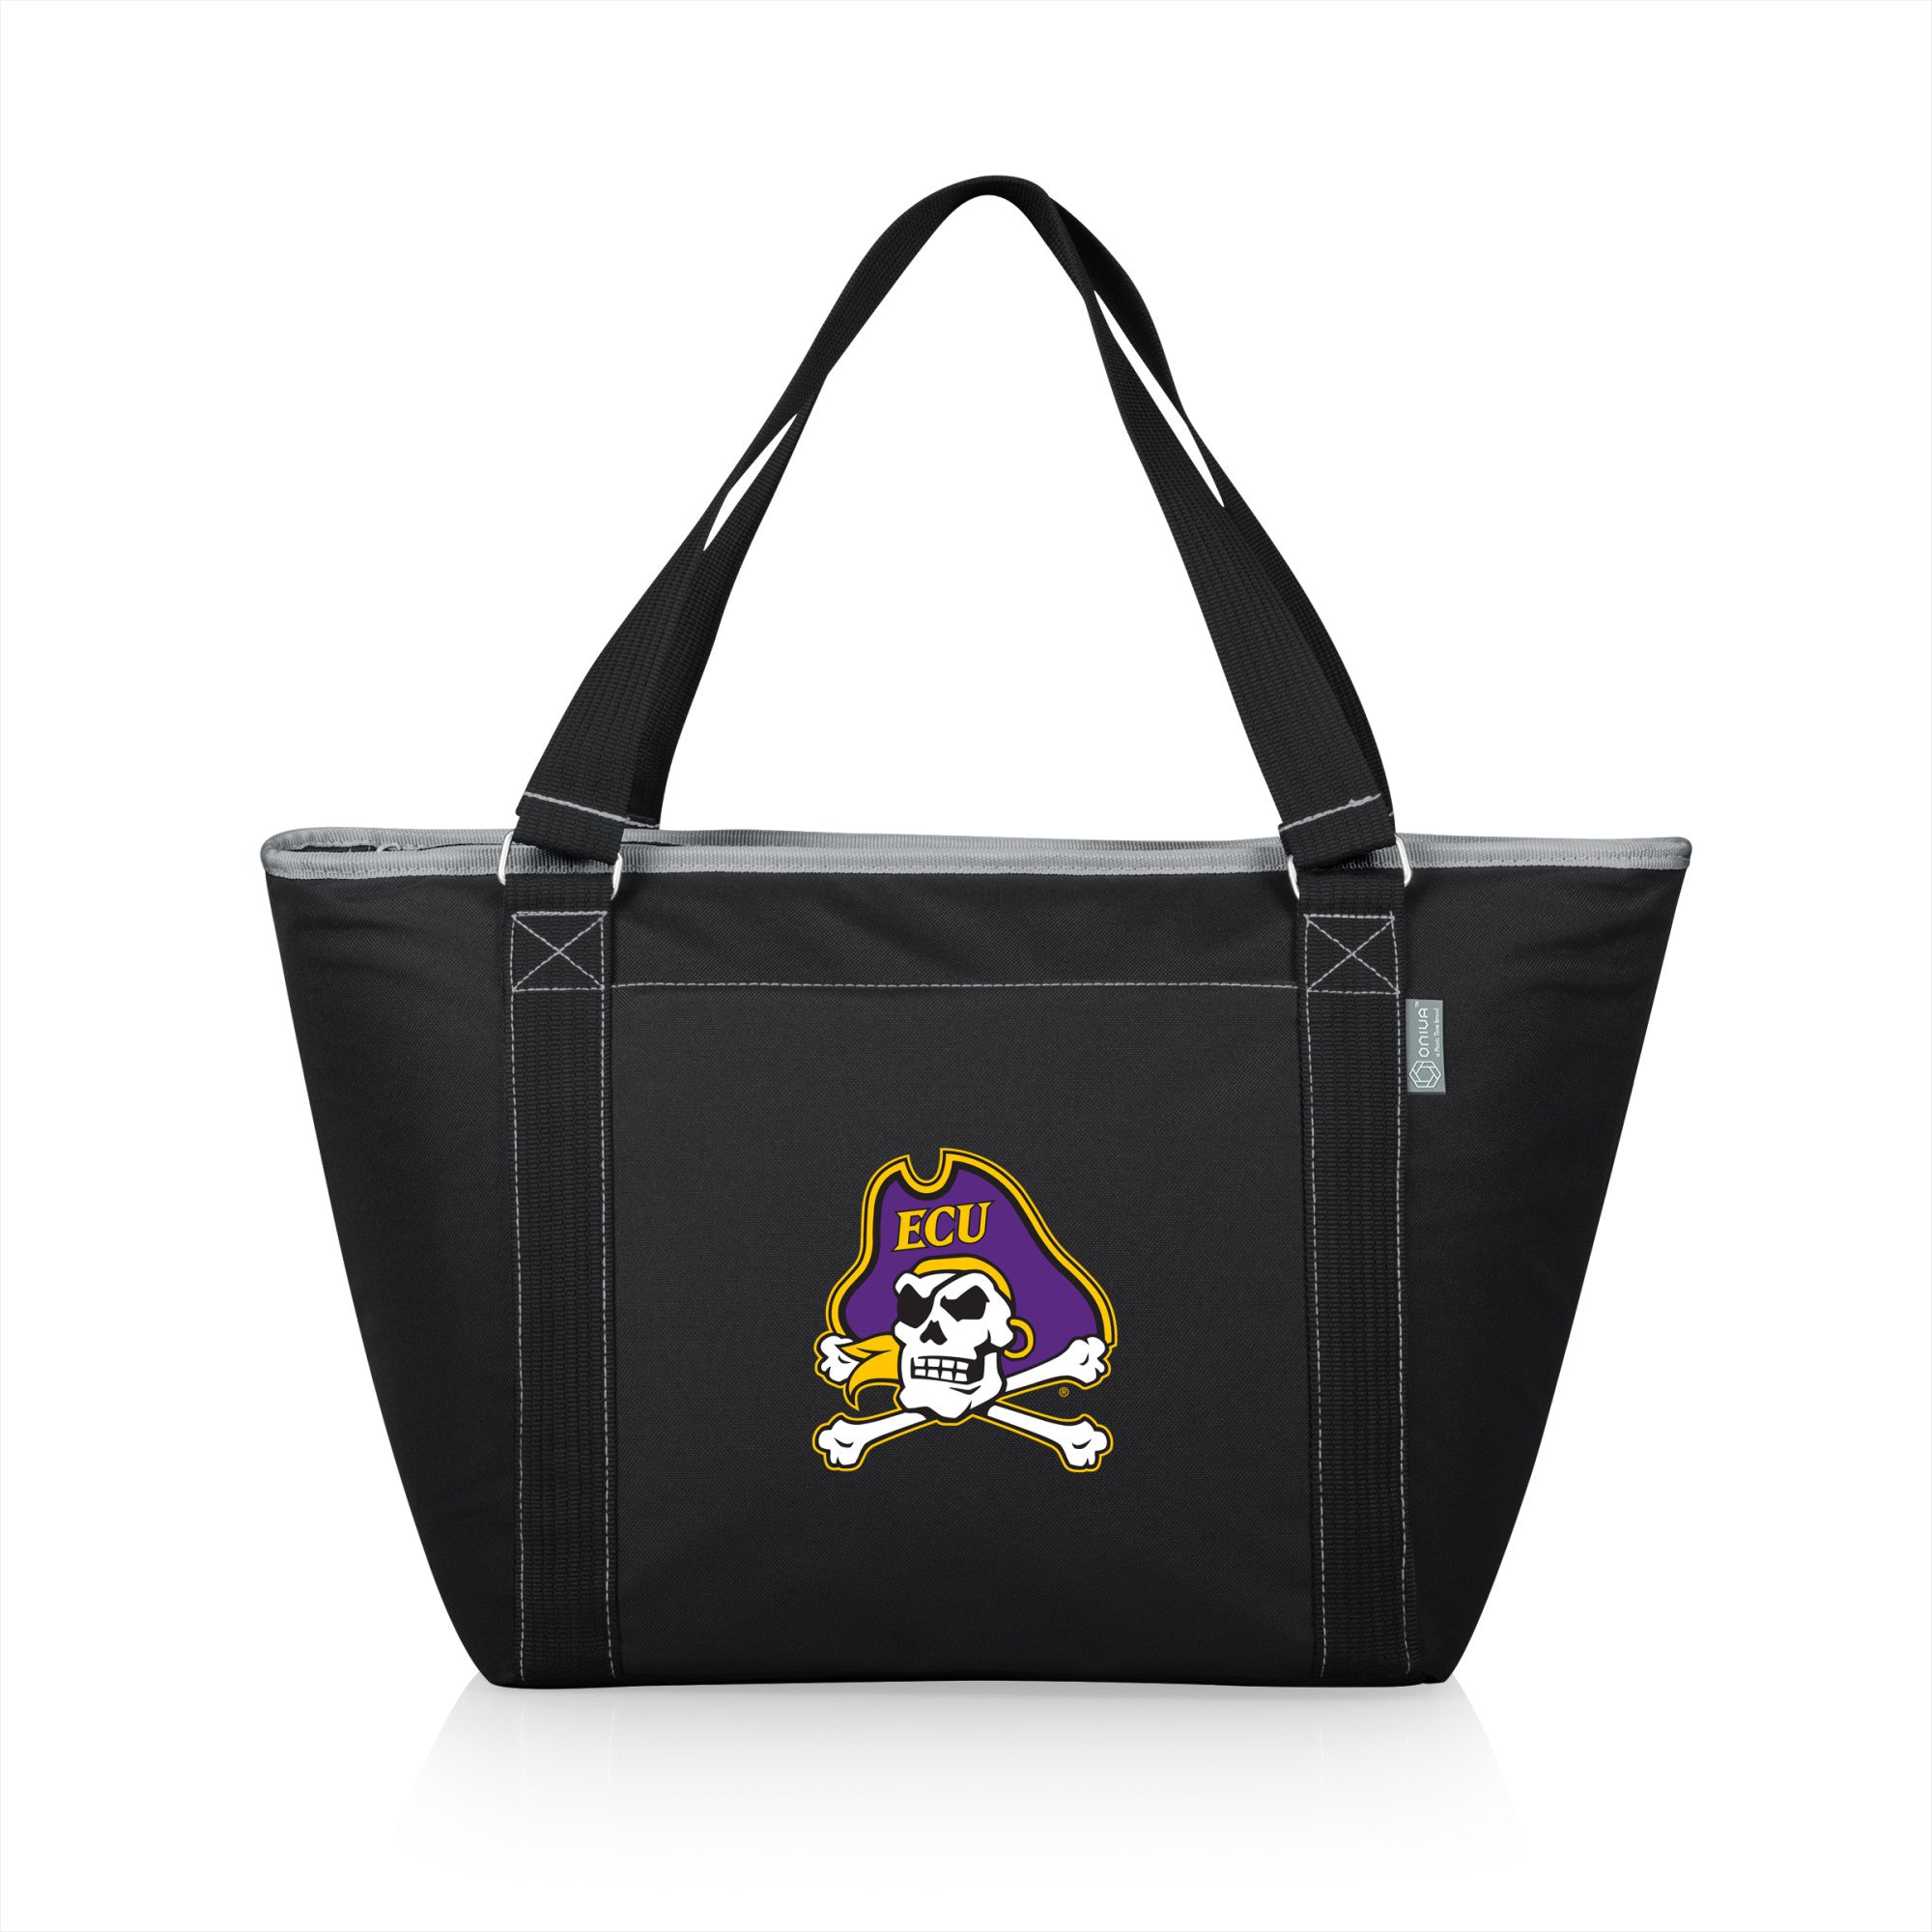 East Carolina Pirates - Topanga Cooler Tote Bag, (Black)